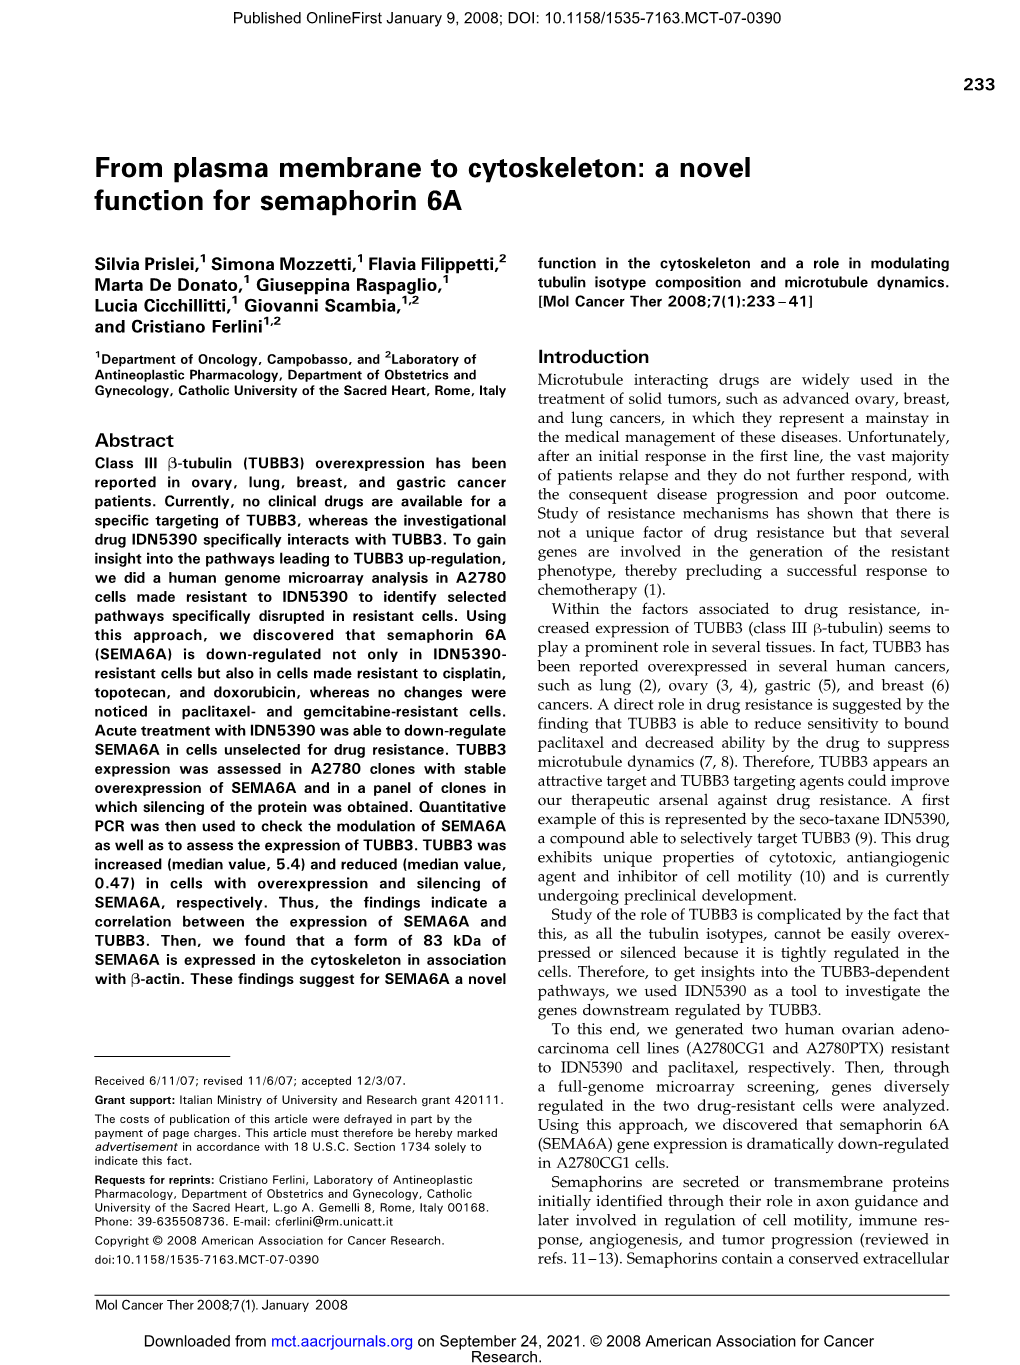 A Novel Function for Semaphorin 6A